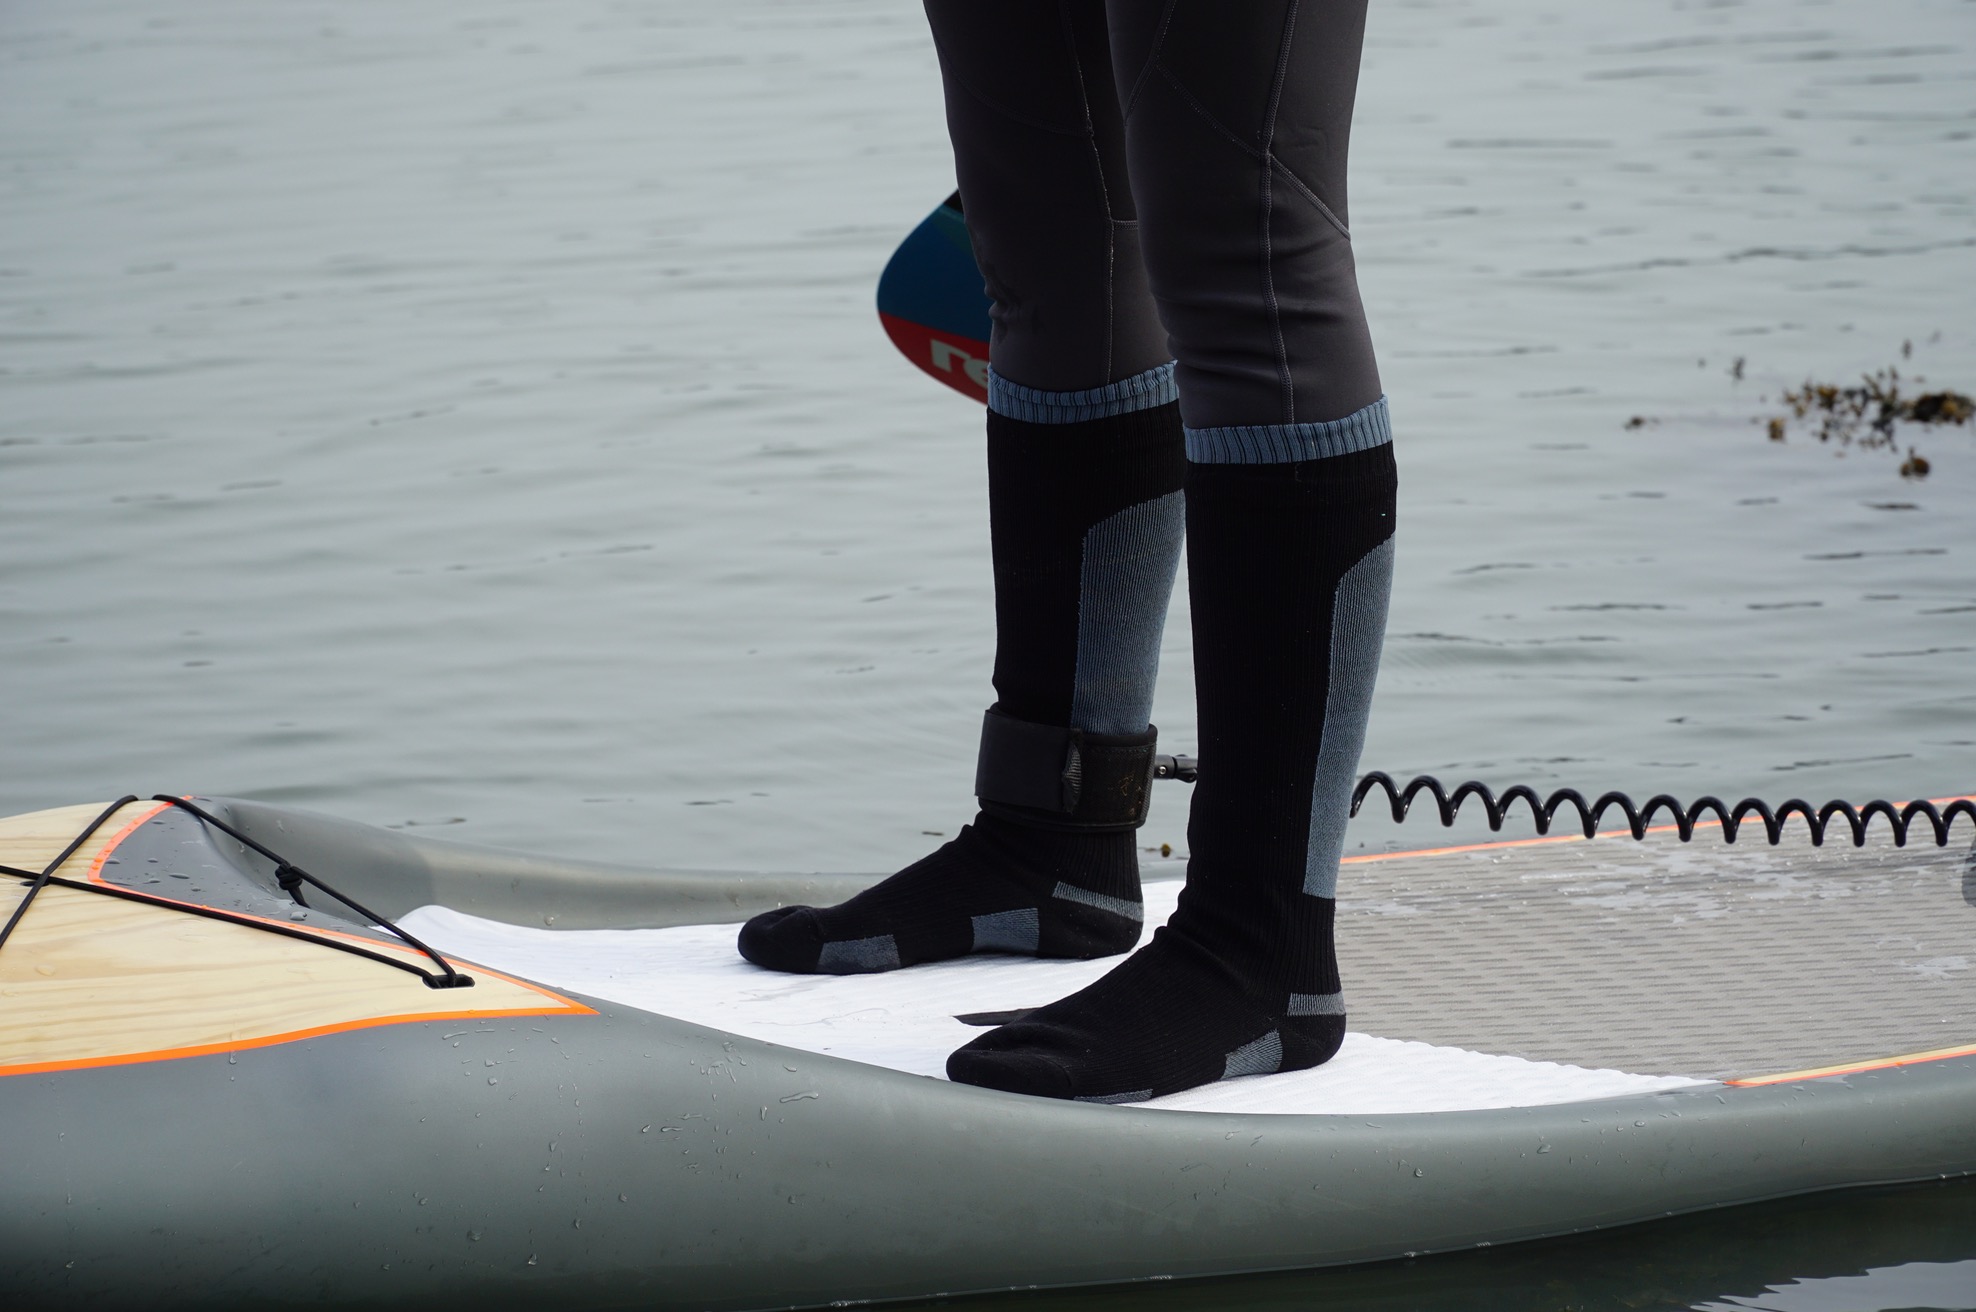 What to wear on your feet paddleboarding? - waterproof socks